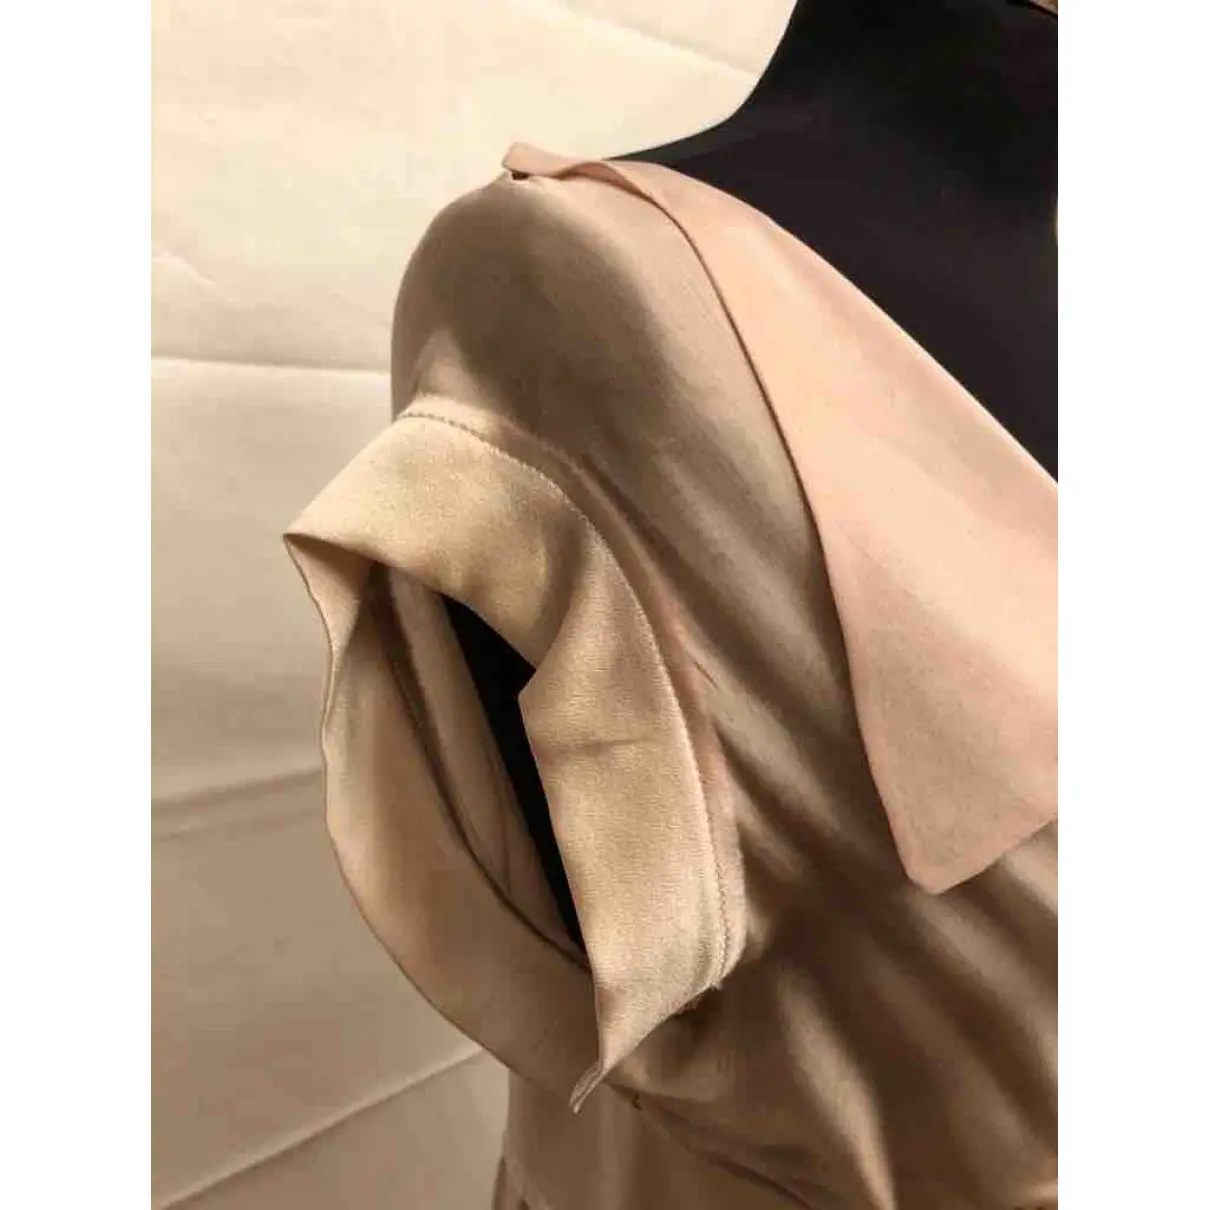 Buy Alberta Ferretti Silk mid-length dress online